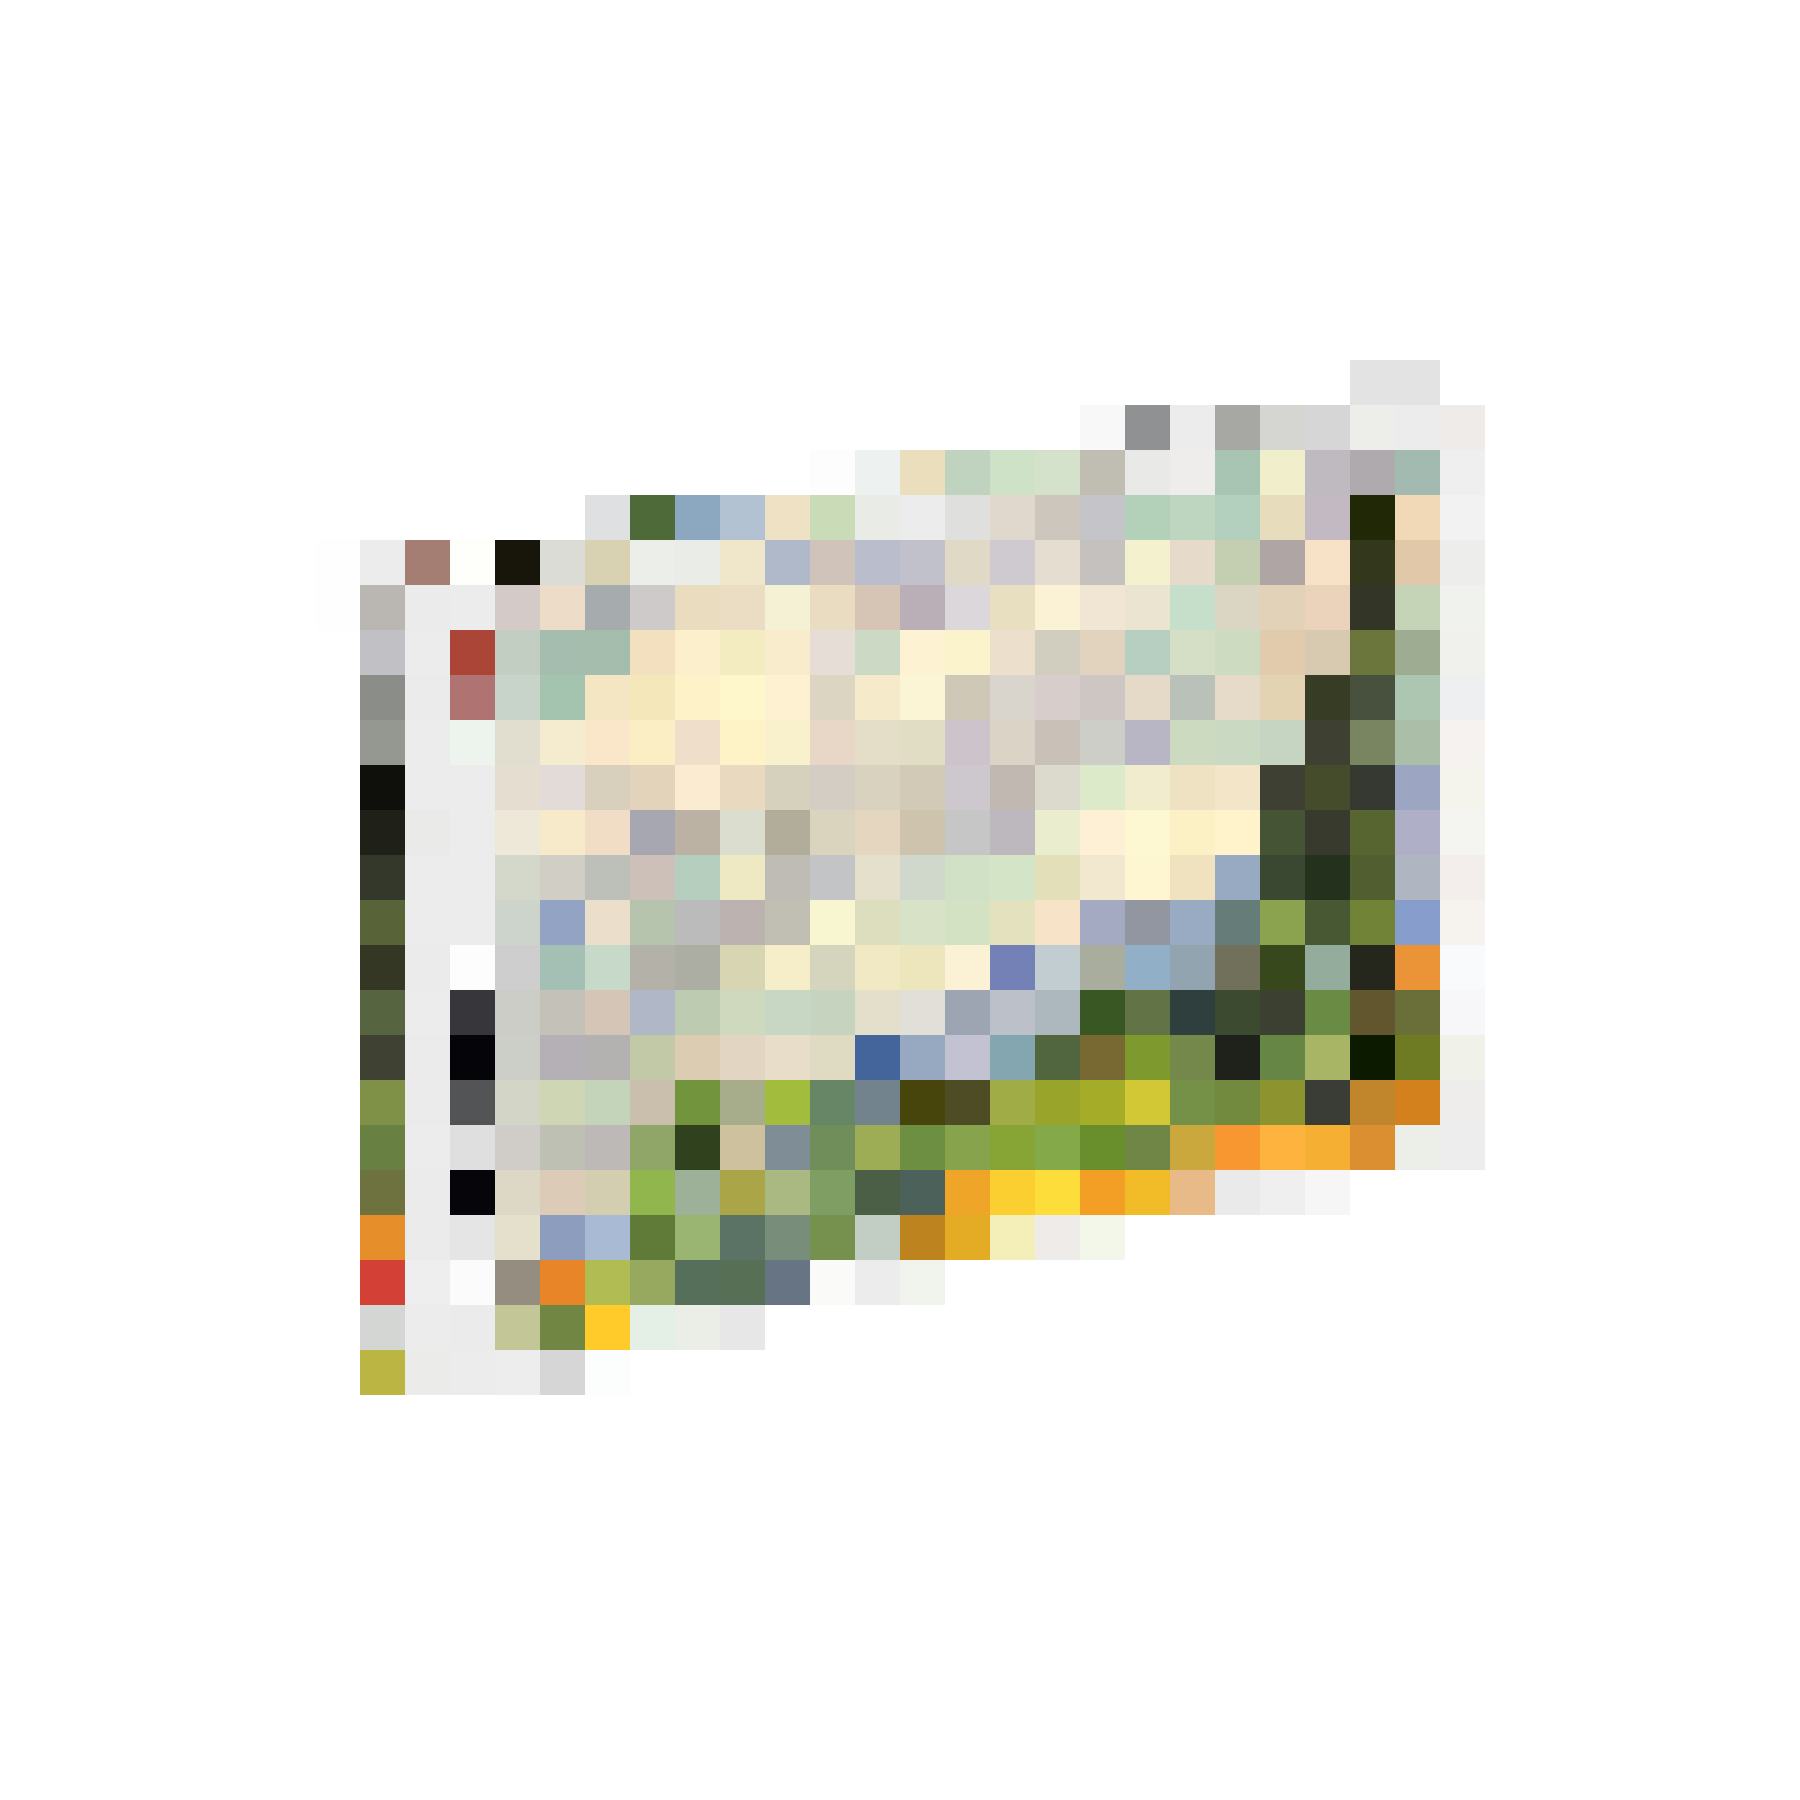 Pezzo per pezzo: Puzzle Piatnik Van Gogh Field with Cypreses (1000 pz.), fr. 17.95, su microspot.ch.